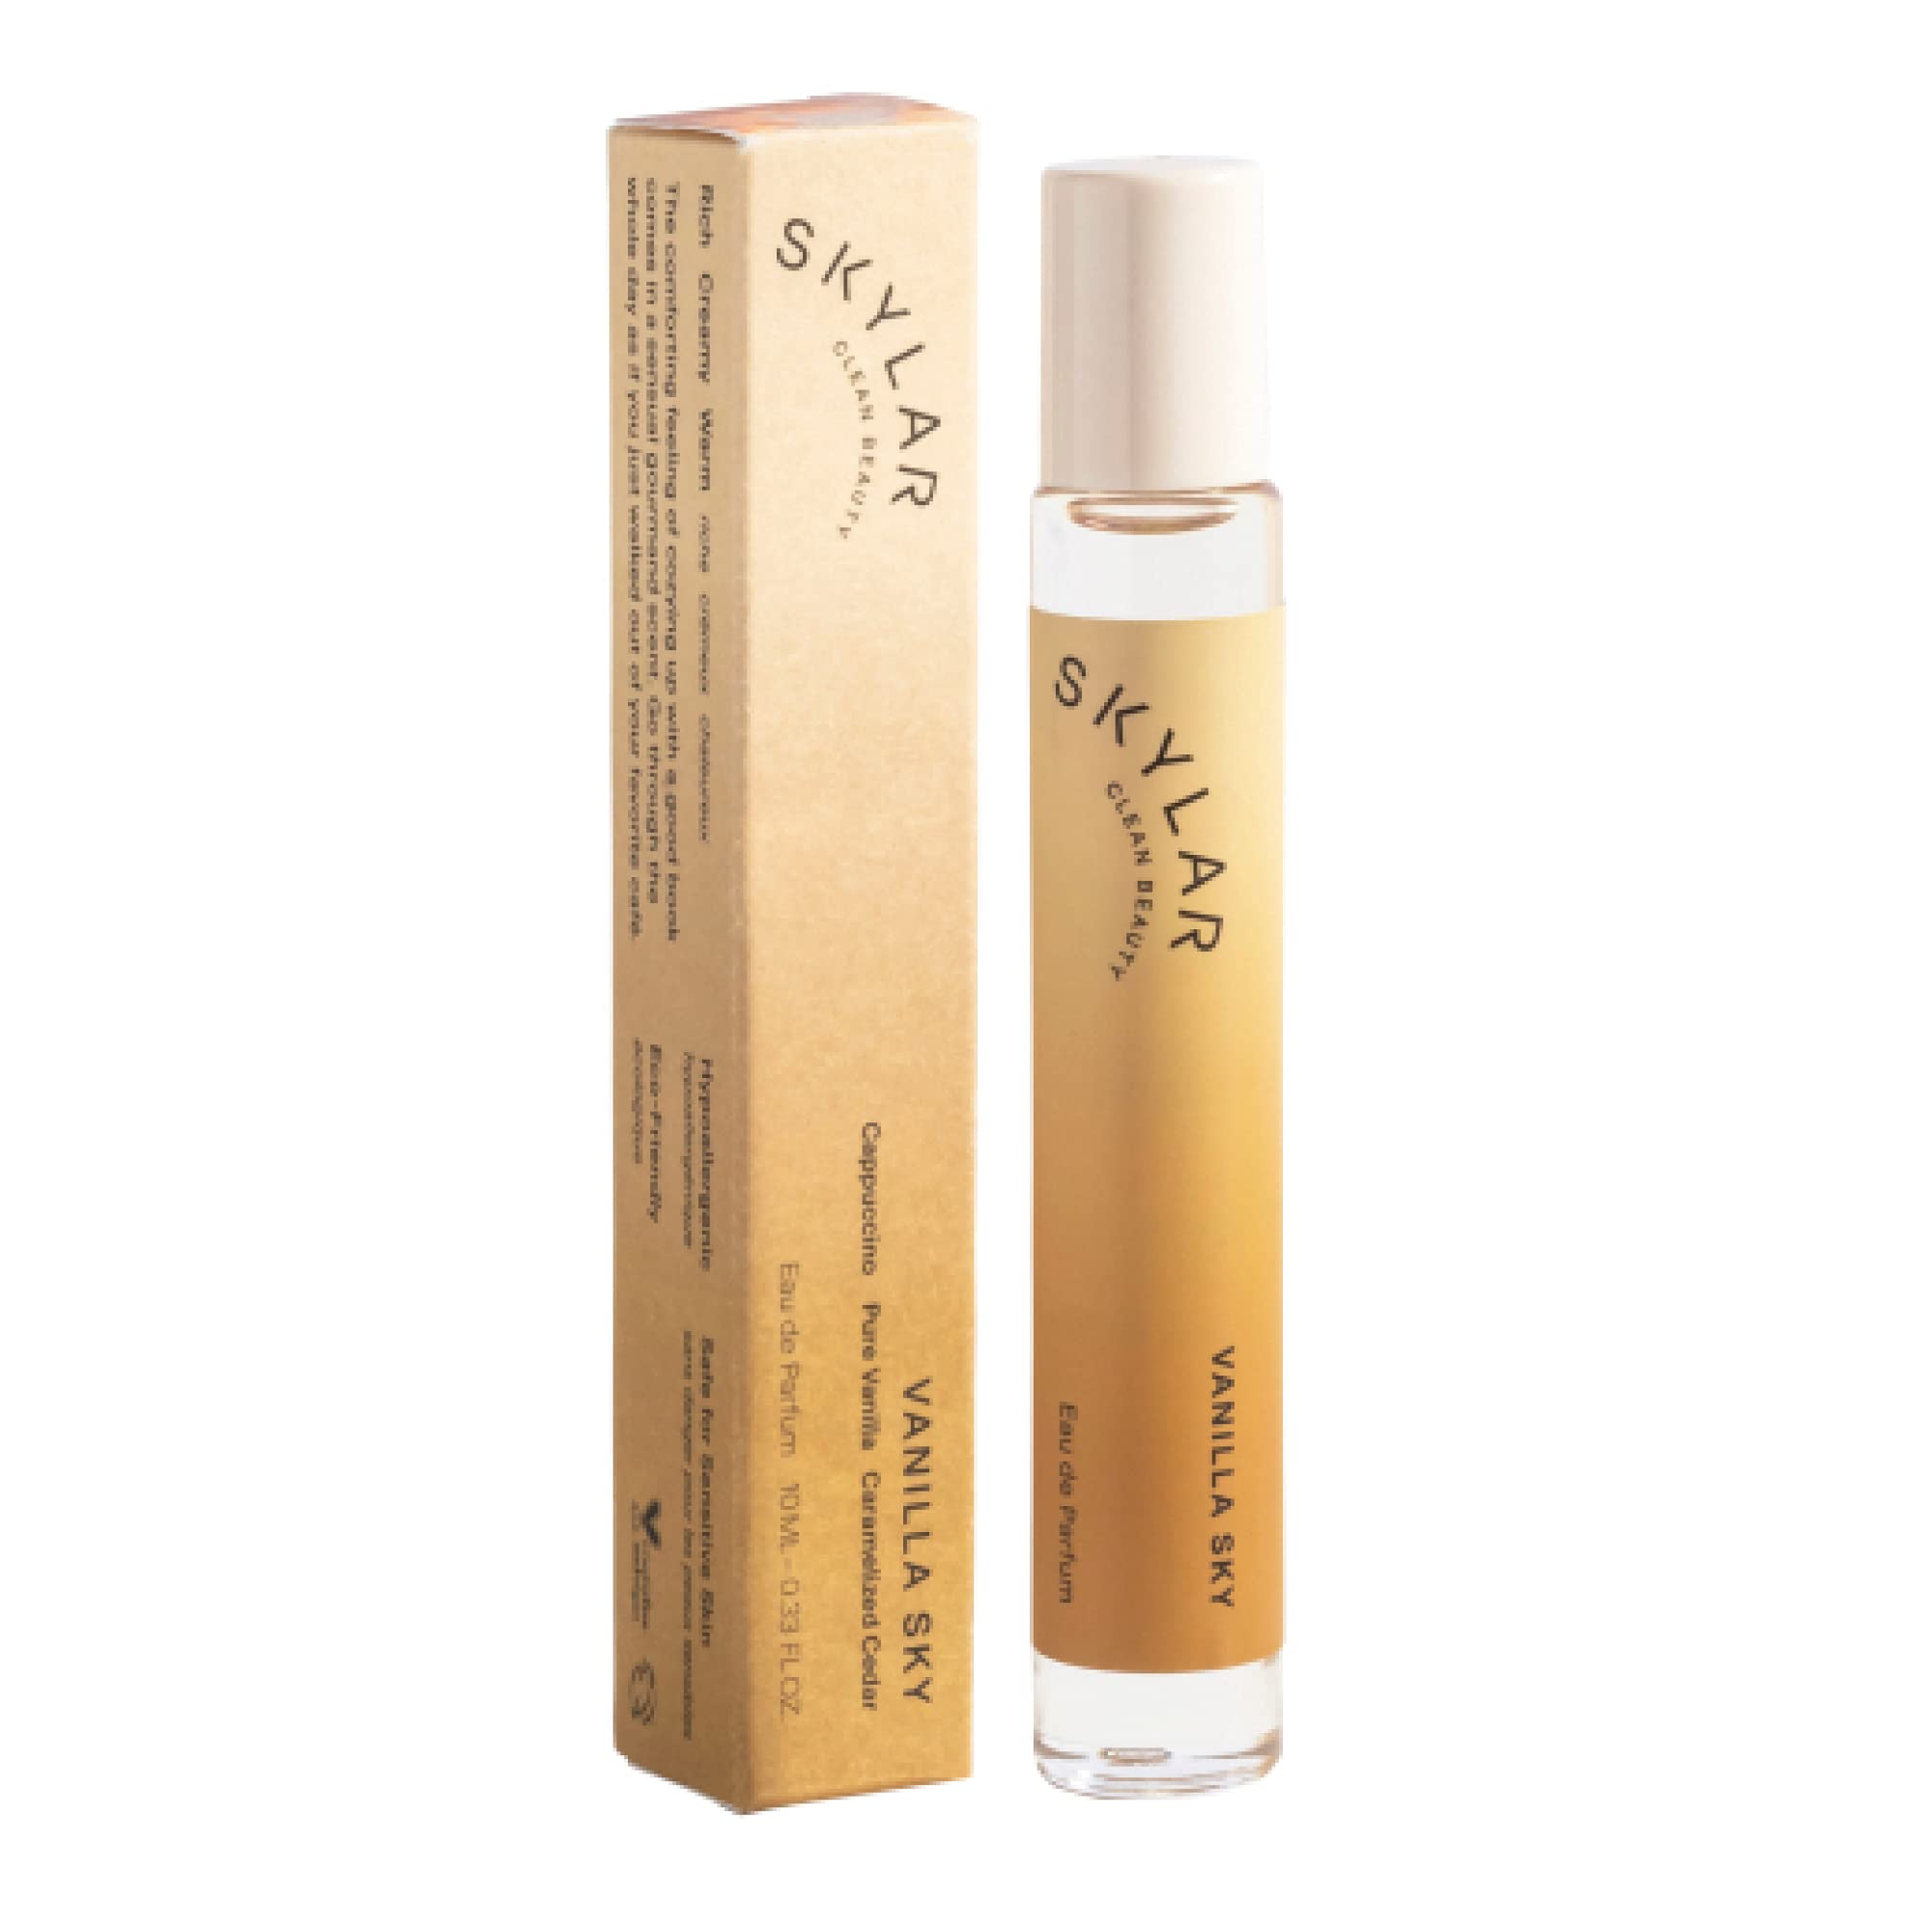 Skylar Vanilla Sky Eau de Perfume Set, 1.7oz + 0.33oz Rollerball - Hypoallergenic & Clean Perfume for Women & Men - Gourmand Perfume with Notes of Cappuccino, Vanilla & Caramelized Cedar